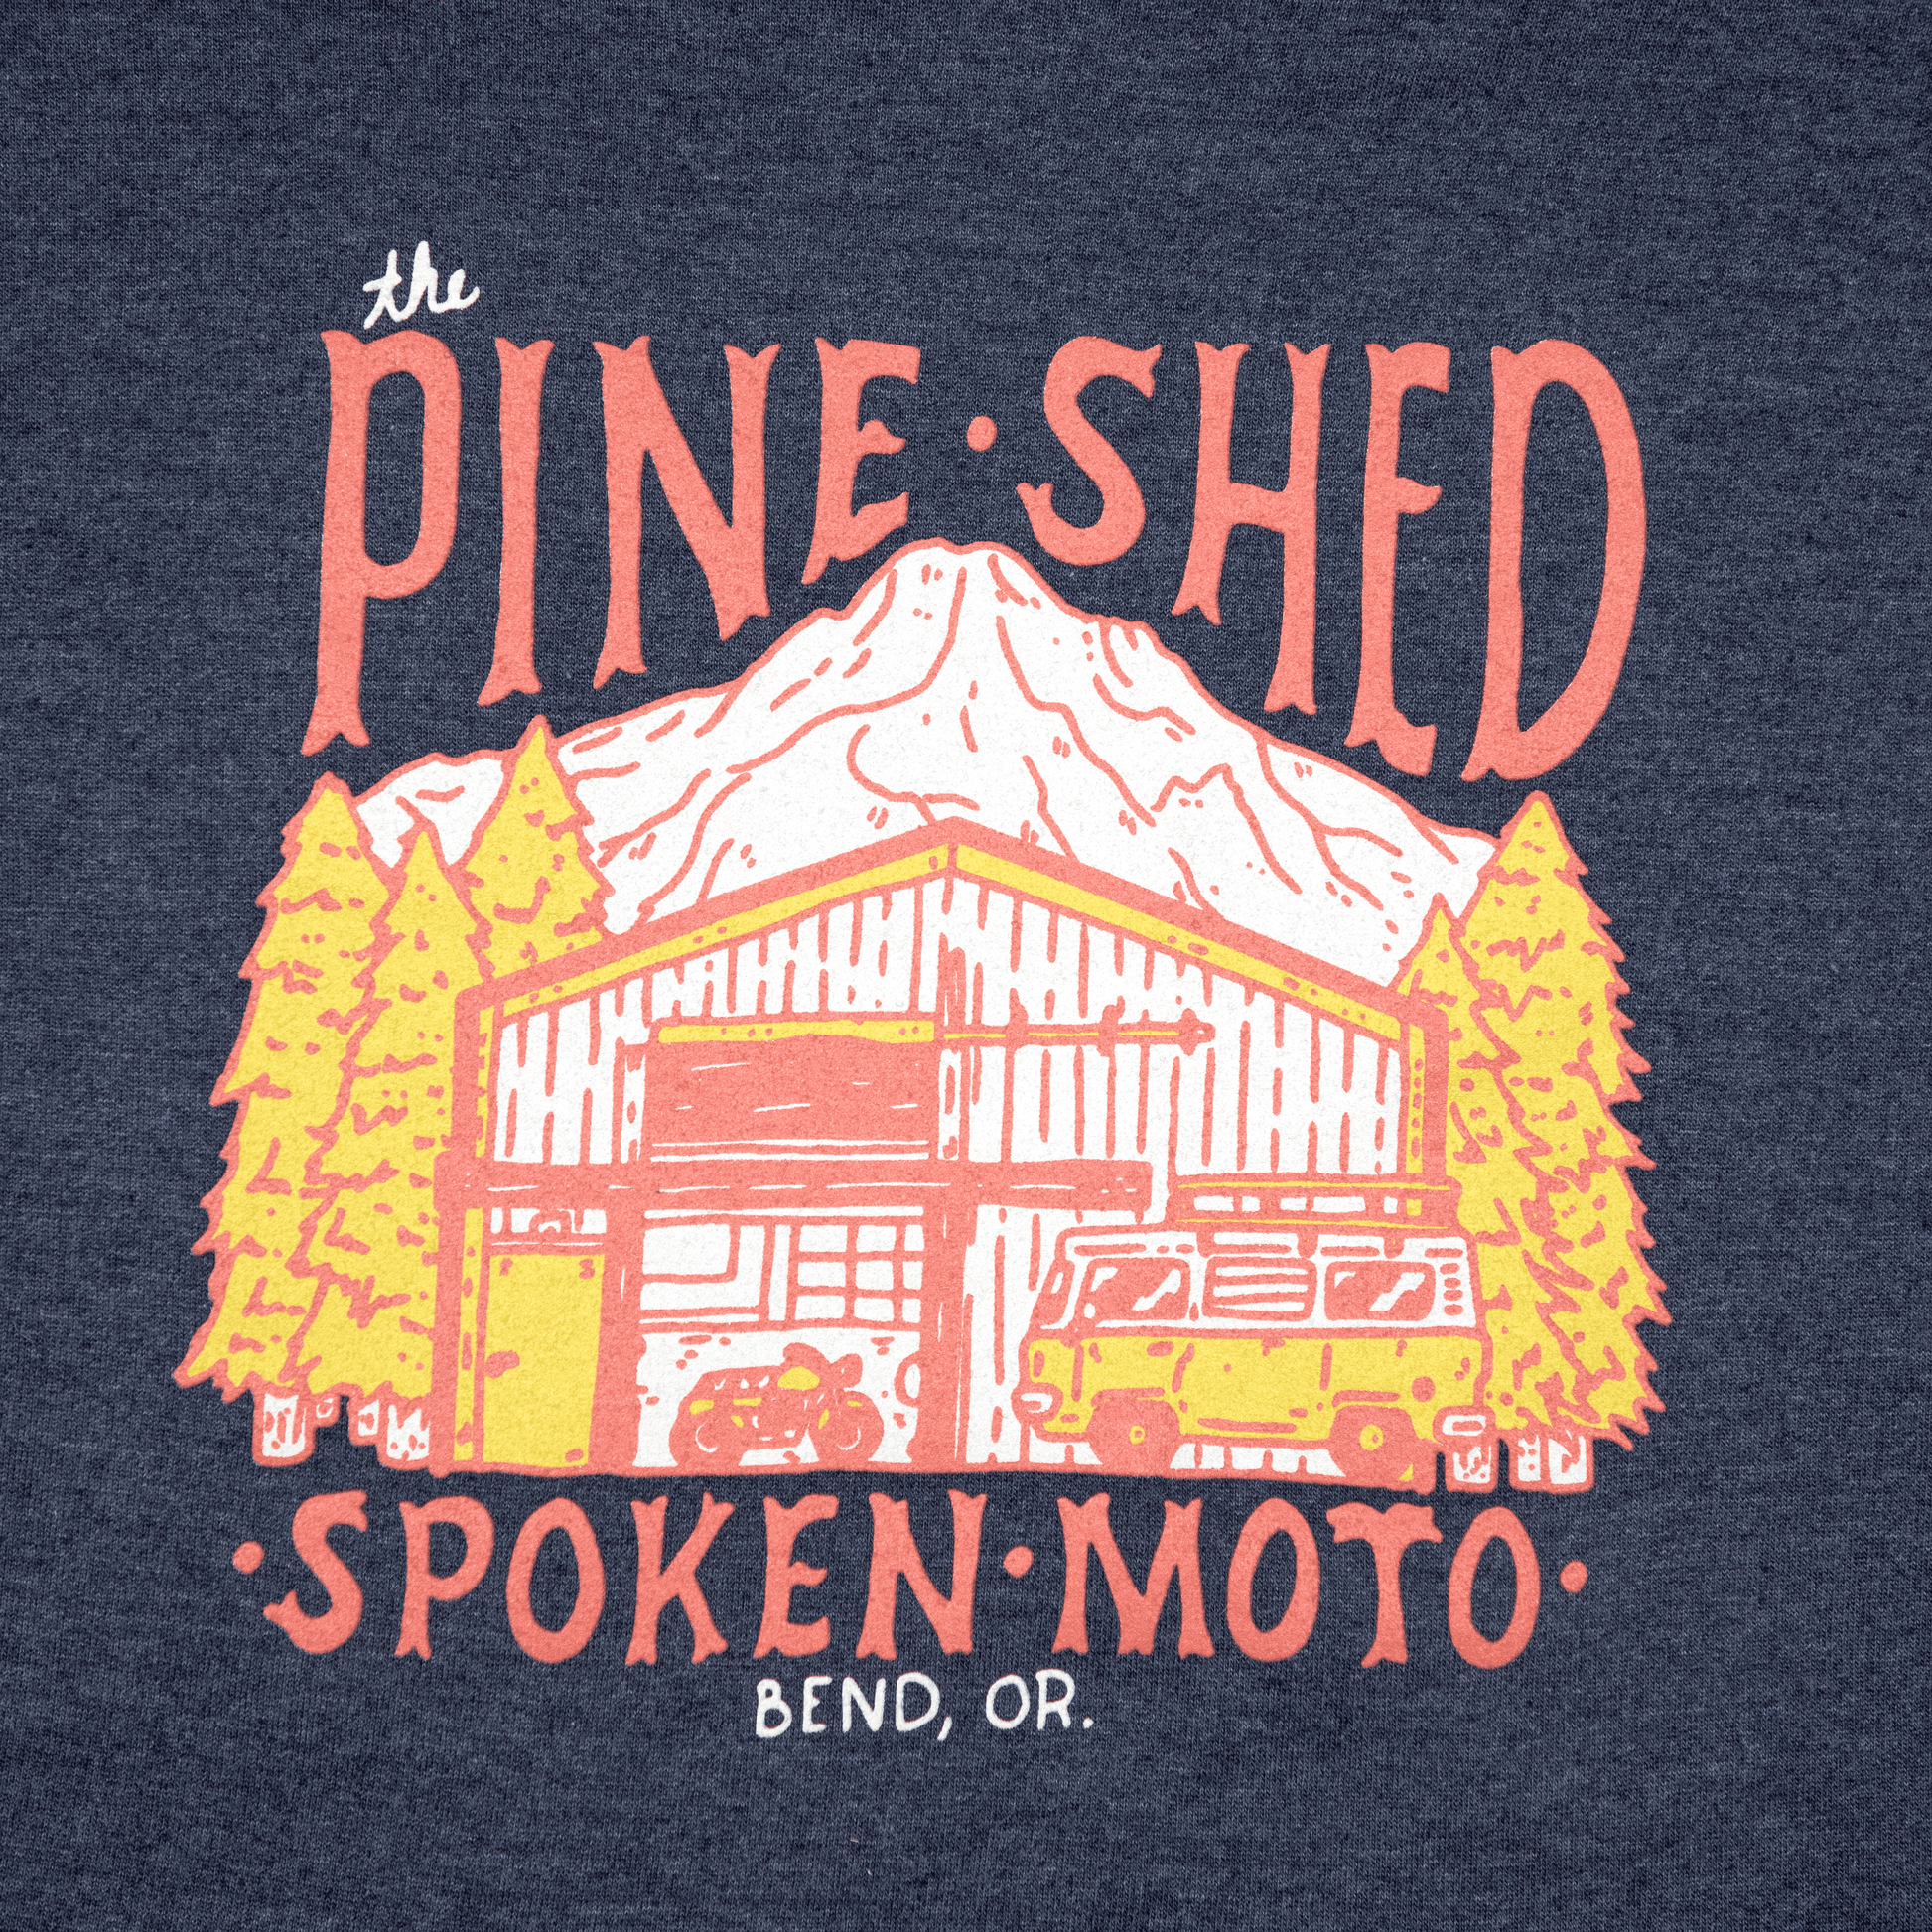 Detail shot of colorful pine shed illustration.